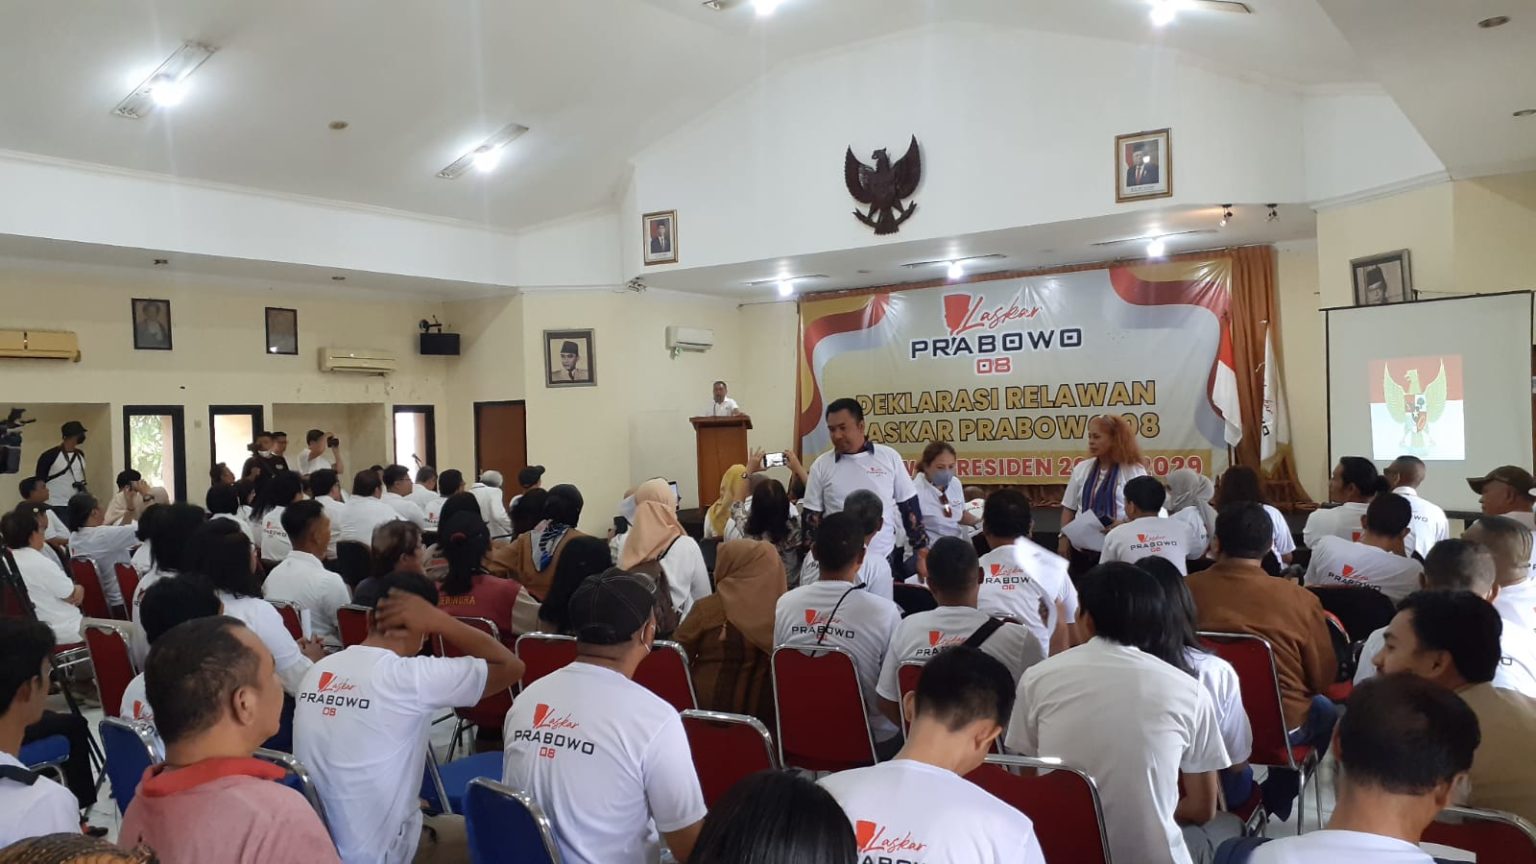 Deklarasi pembentukan Laskar Prabowo 08 (Dok Istimewa untuk Konteks.co.id)